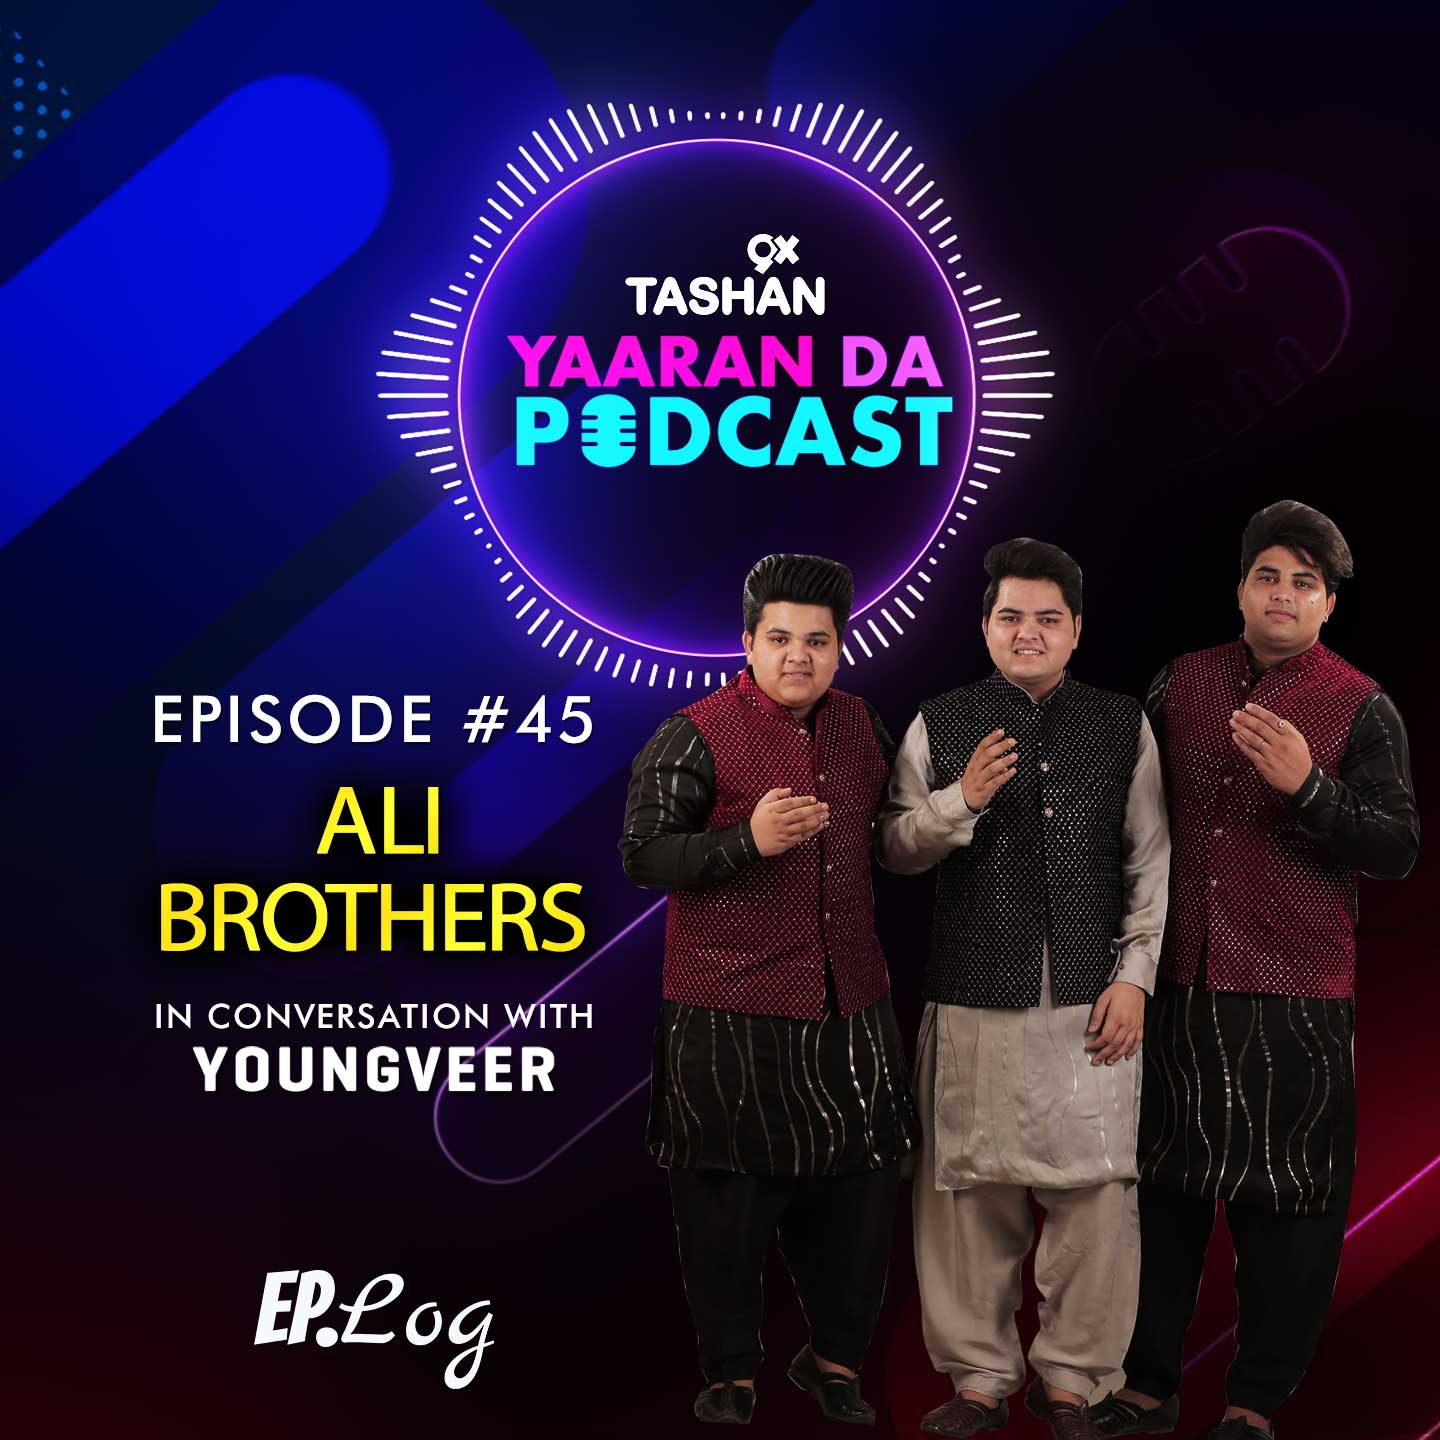 9x Tashan Yaaran Da Podcast ft. Ali Brothers